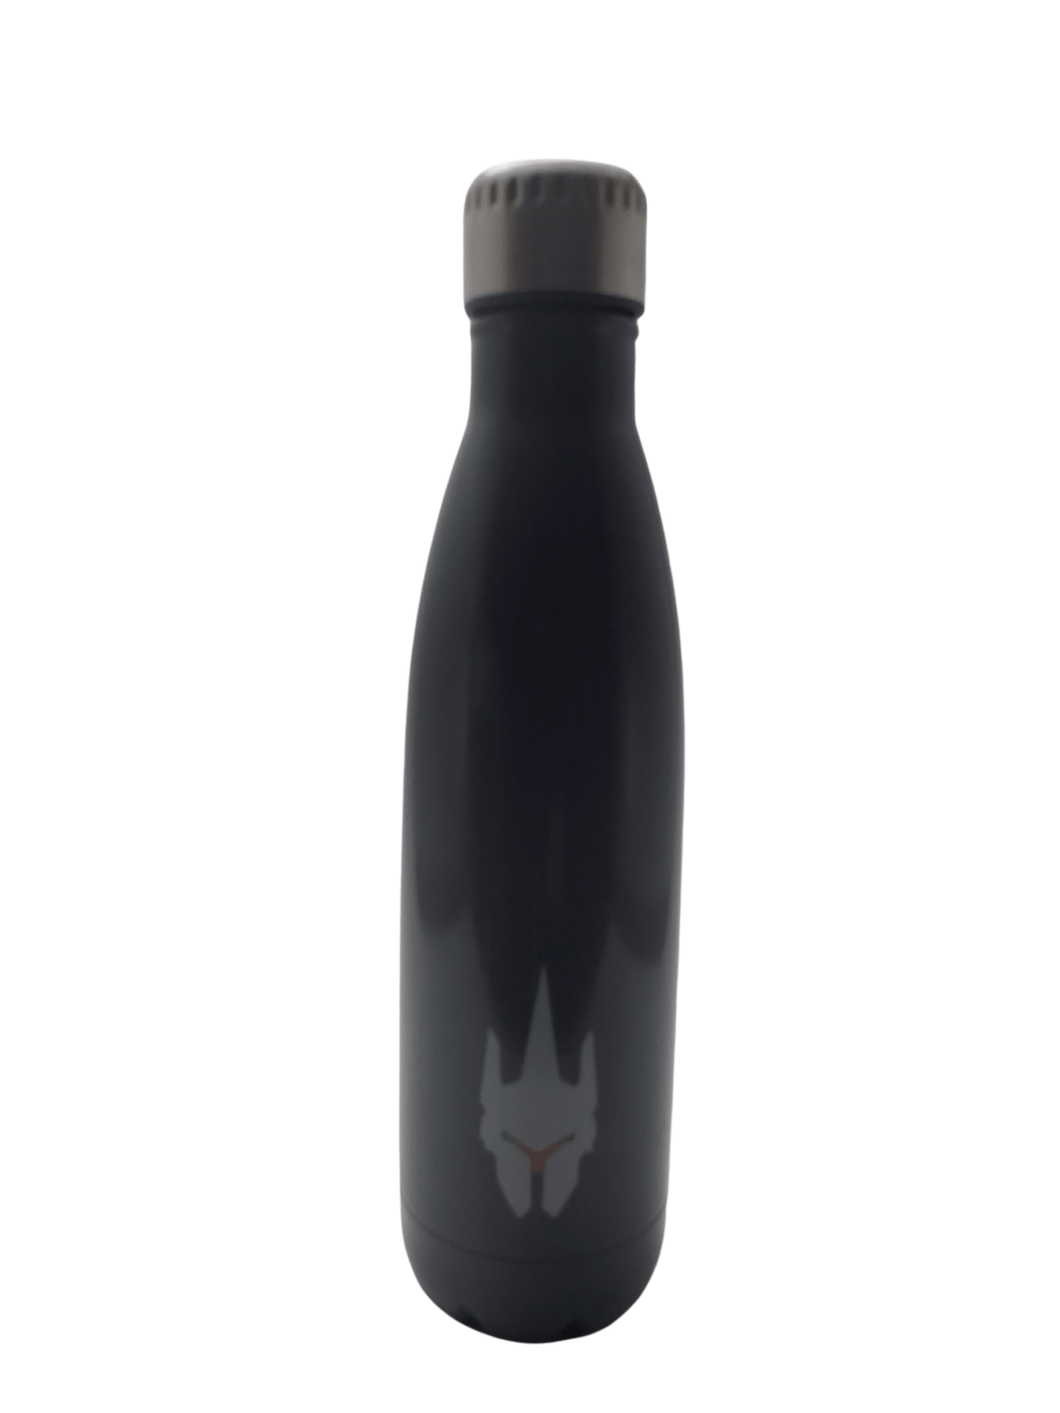 Overwatch Steel Reinhardt Surreal Entertainment Water Bottle